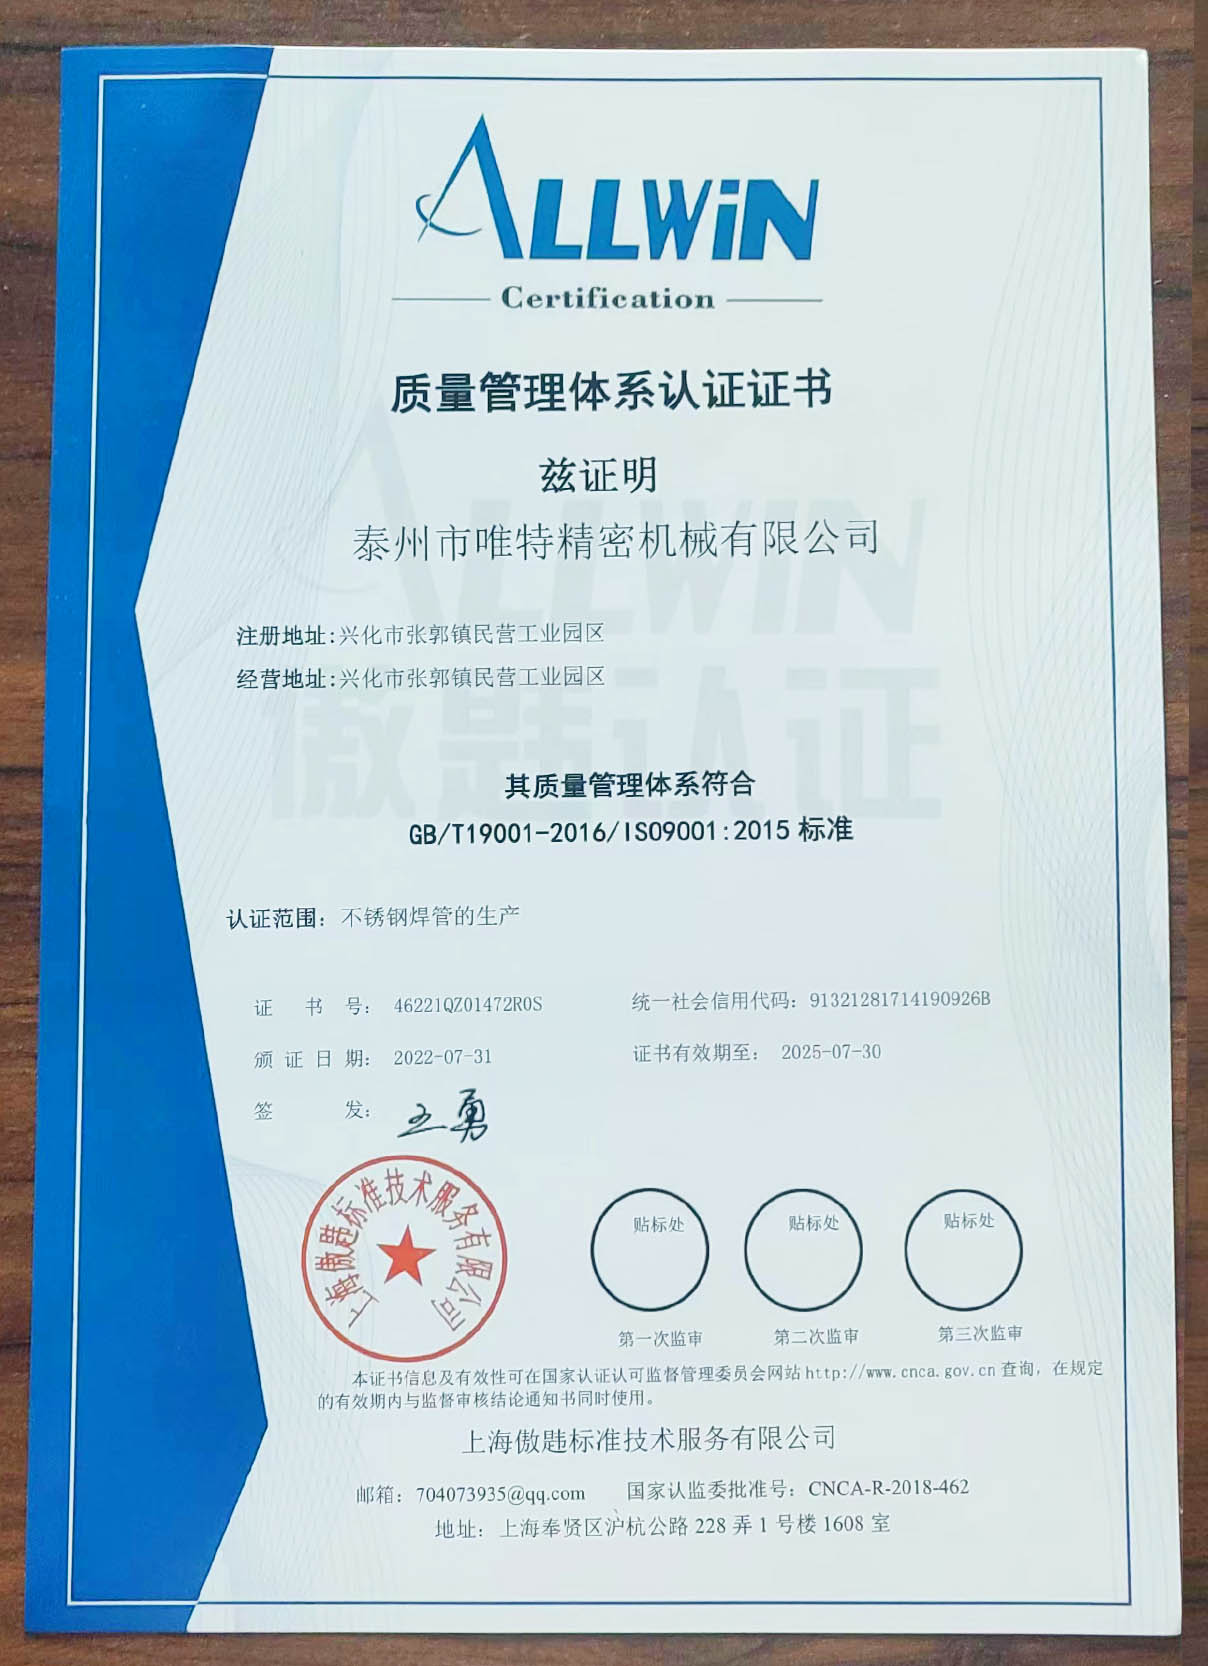 Company certificate (4)